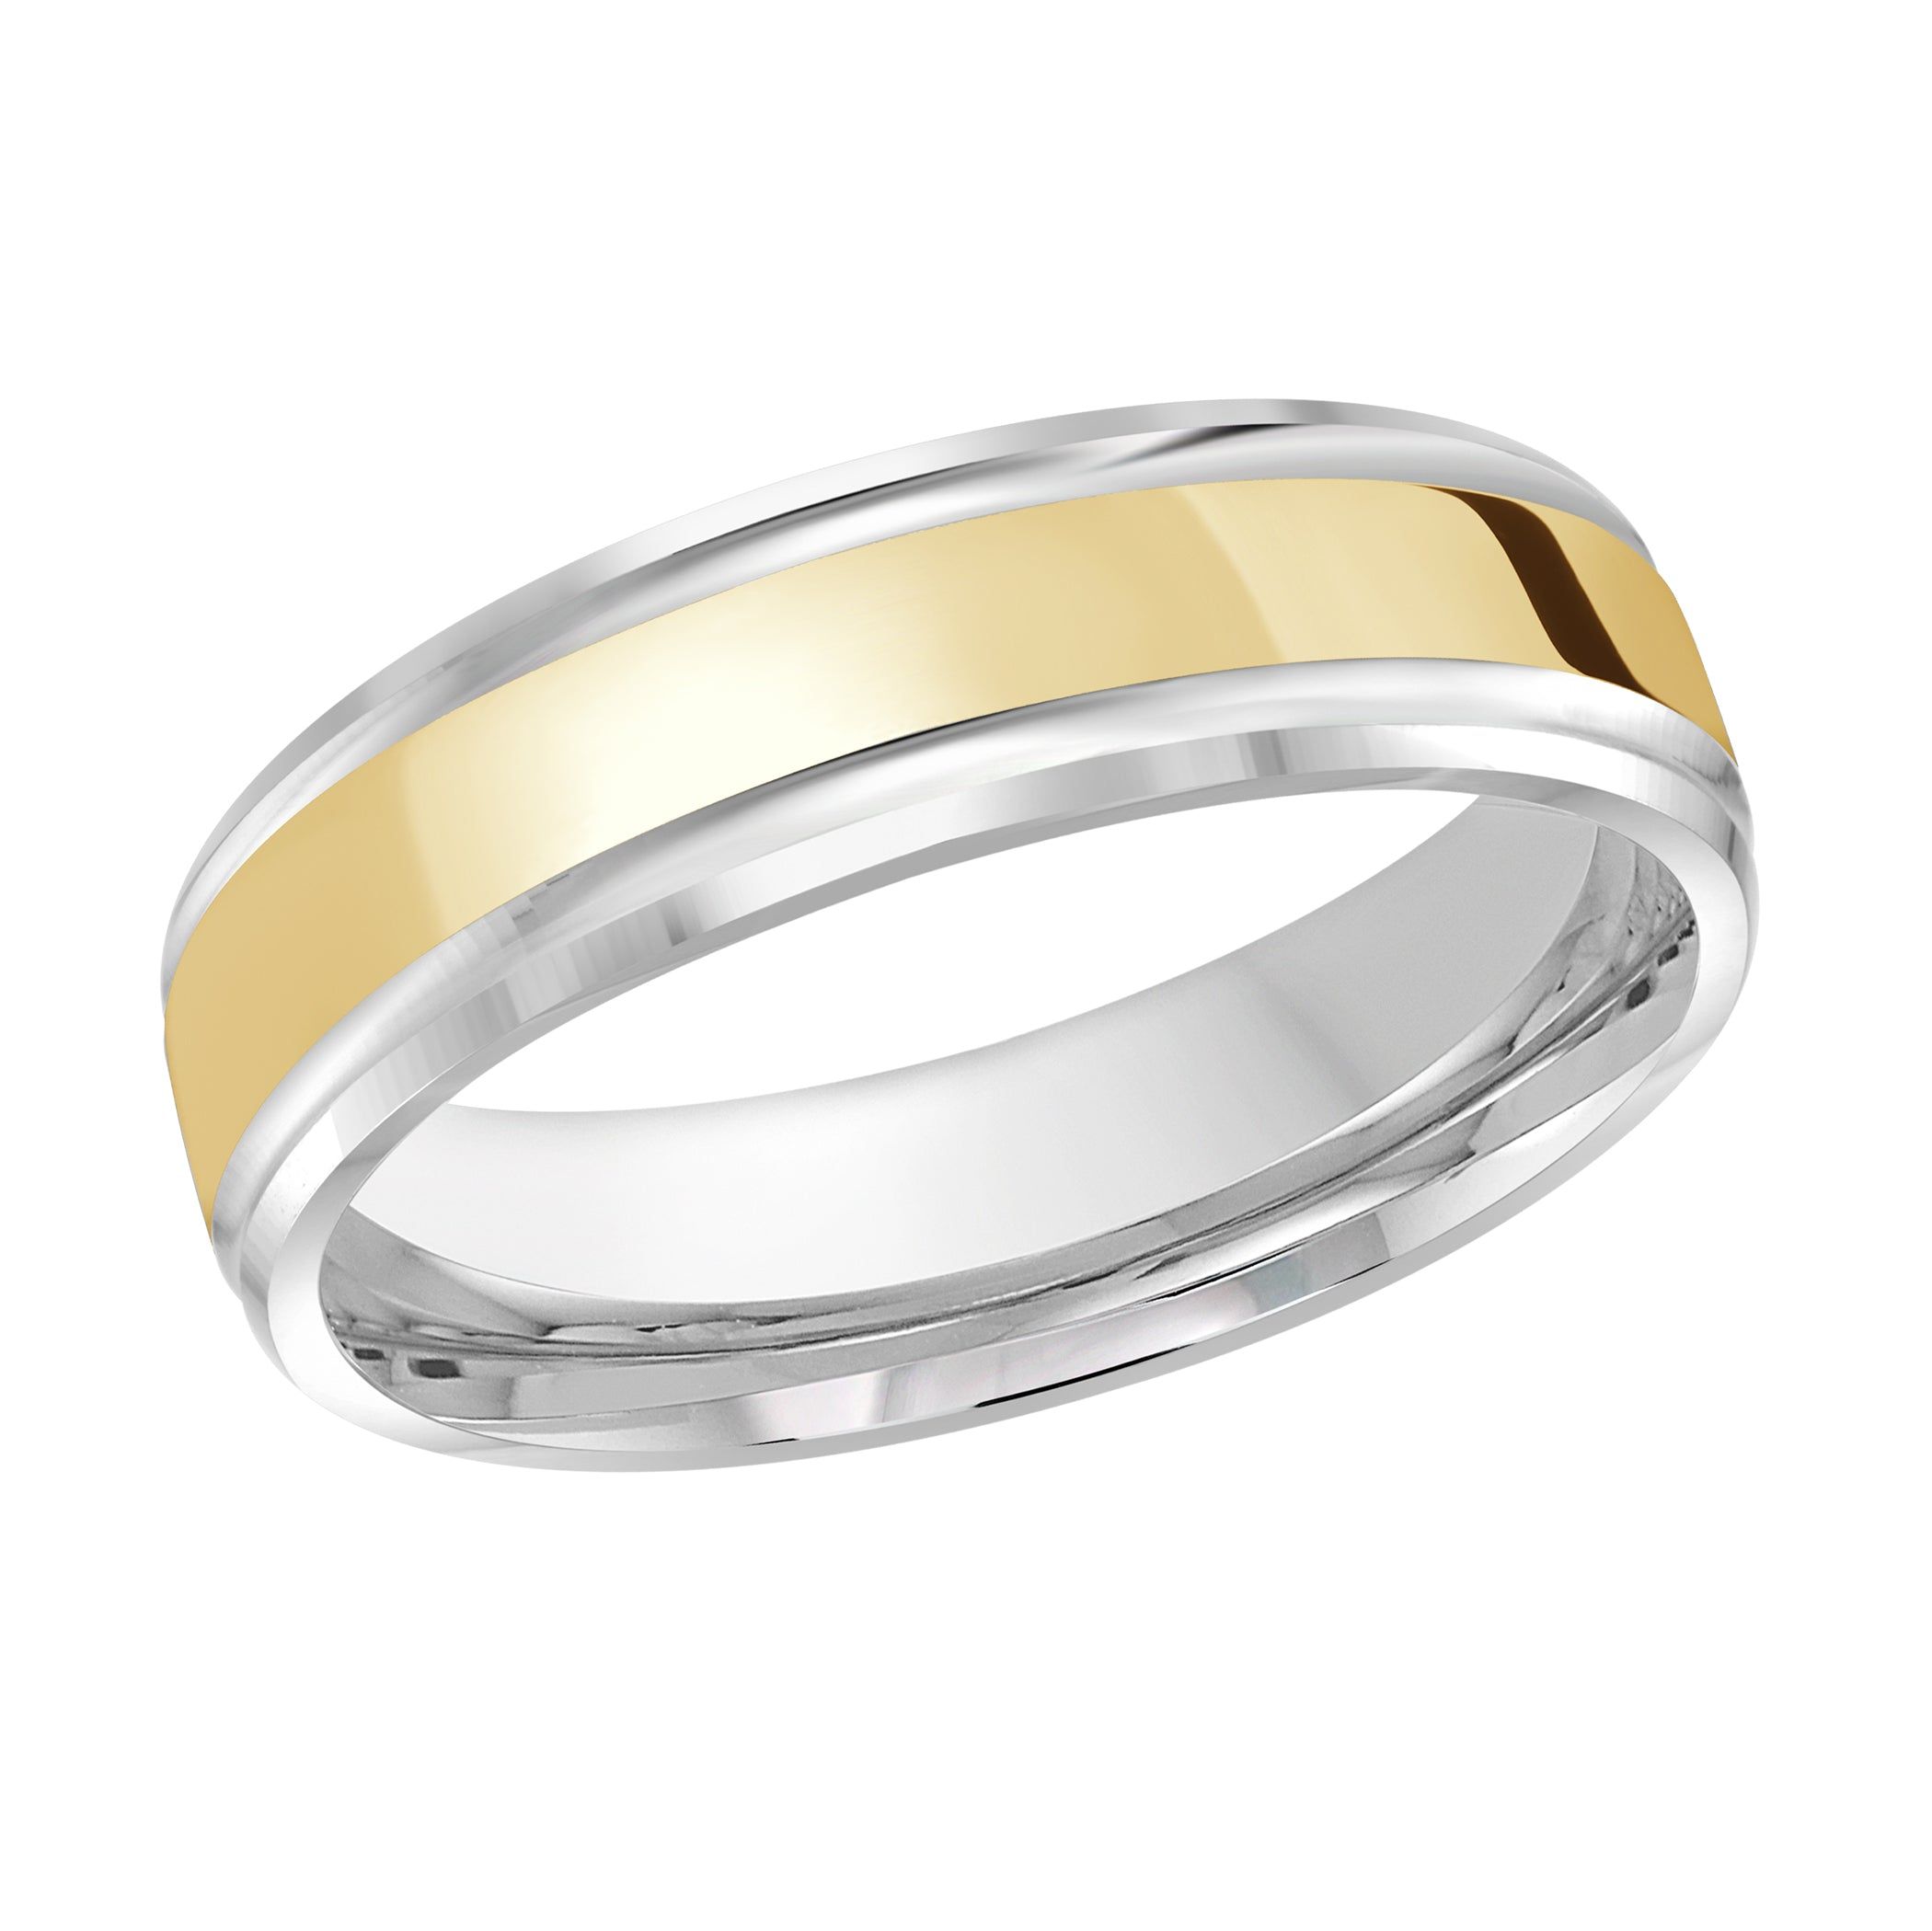 Men's 6mm Two-tone Beveled Edge Wedding Ring